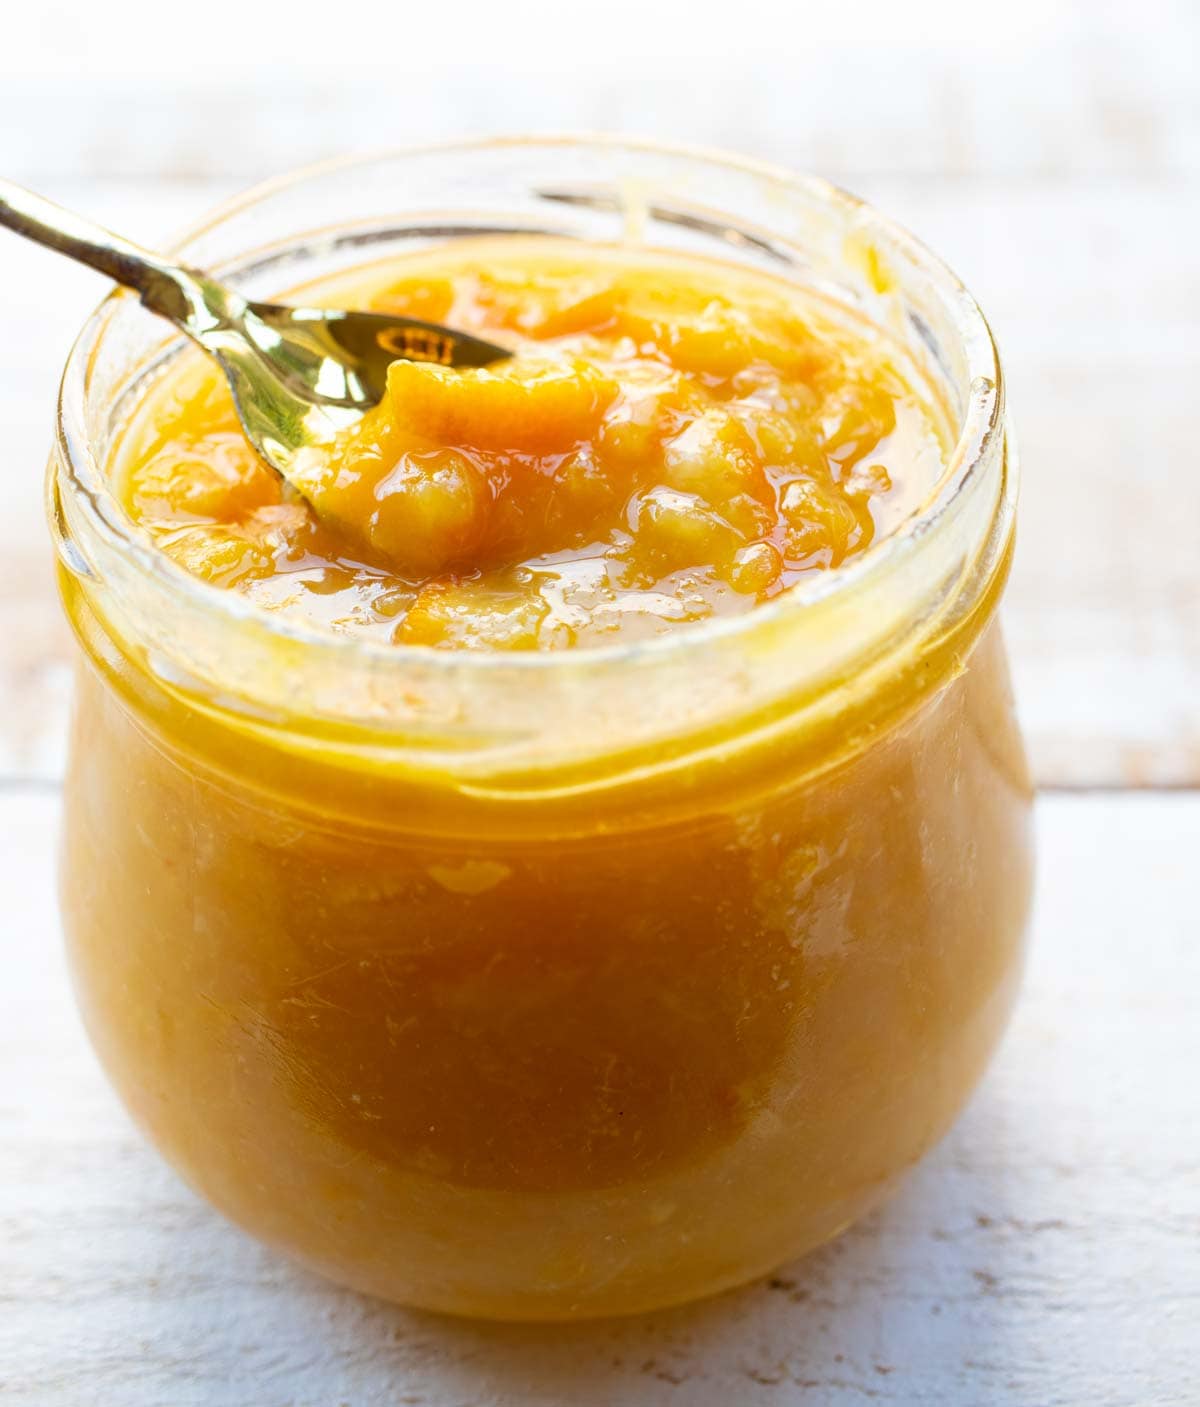 a glass jar of sugar free orange marmalade with a spoon